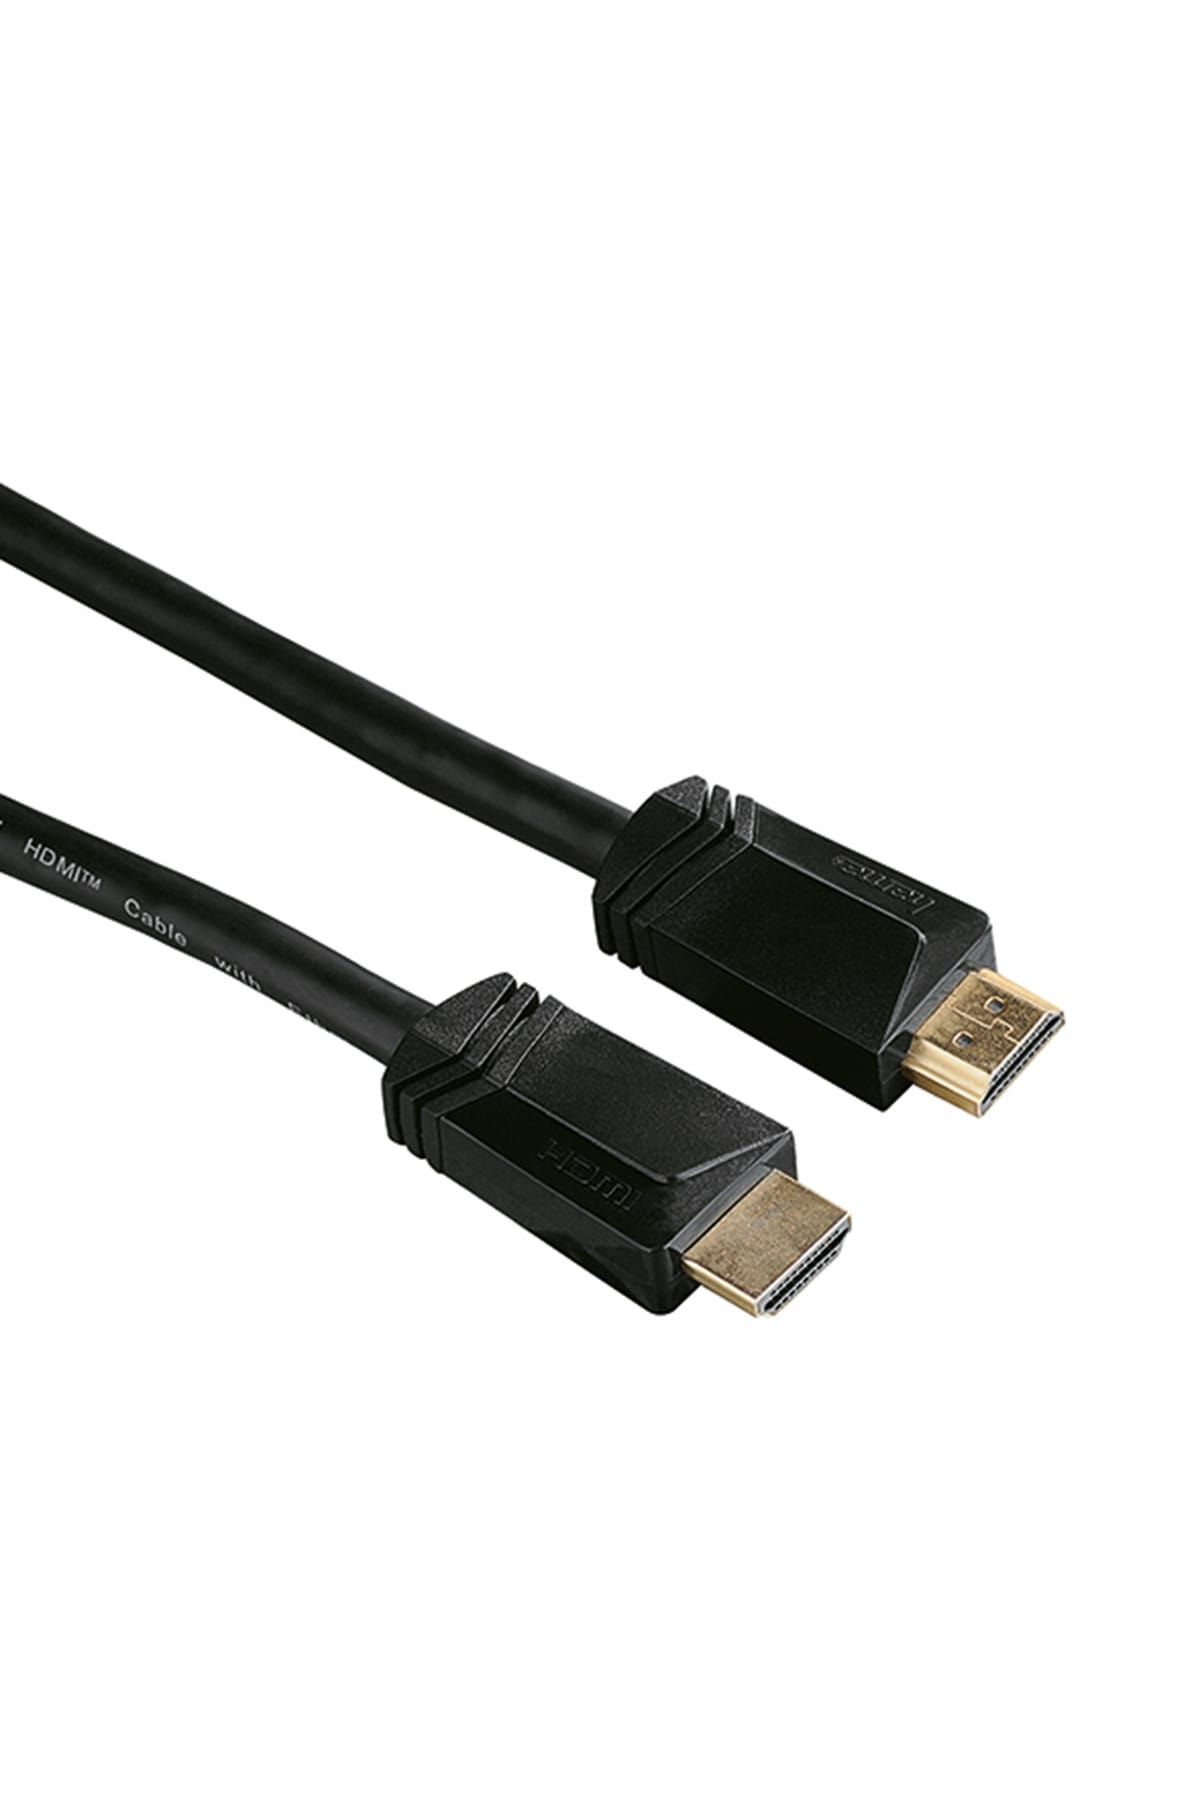 Hama HS HDMI Ethernet Altın Uç, 4K, Siyah 3S 5m hm-122106